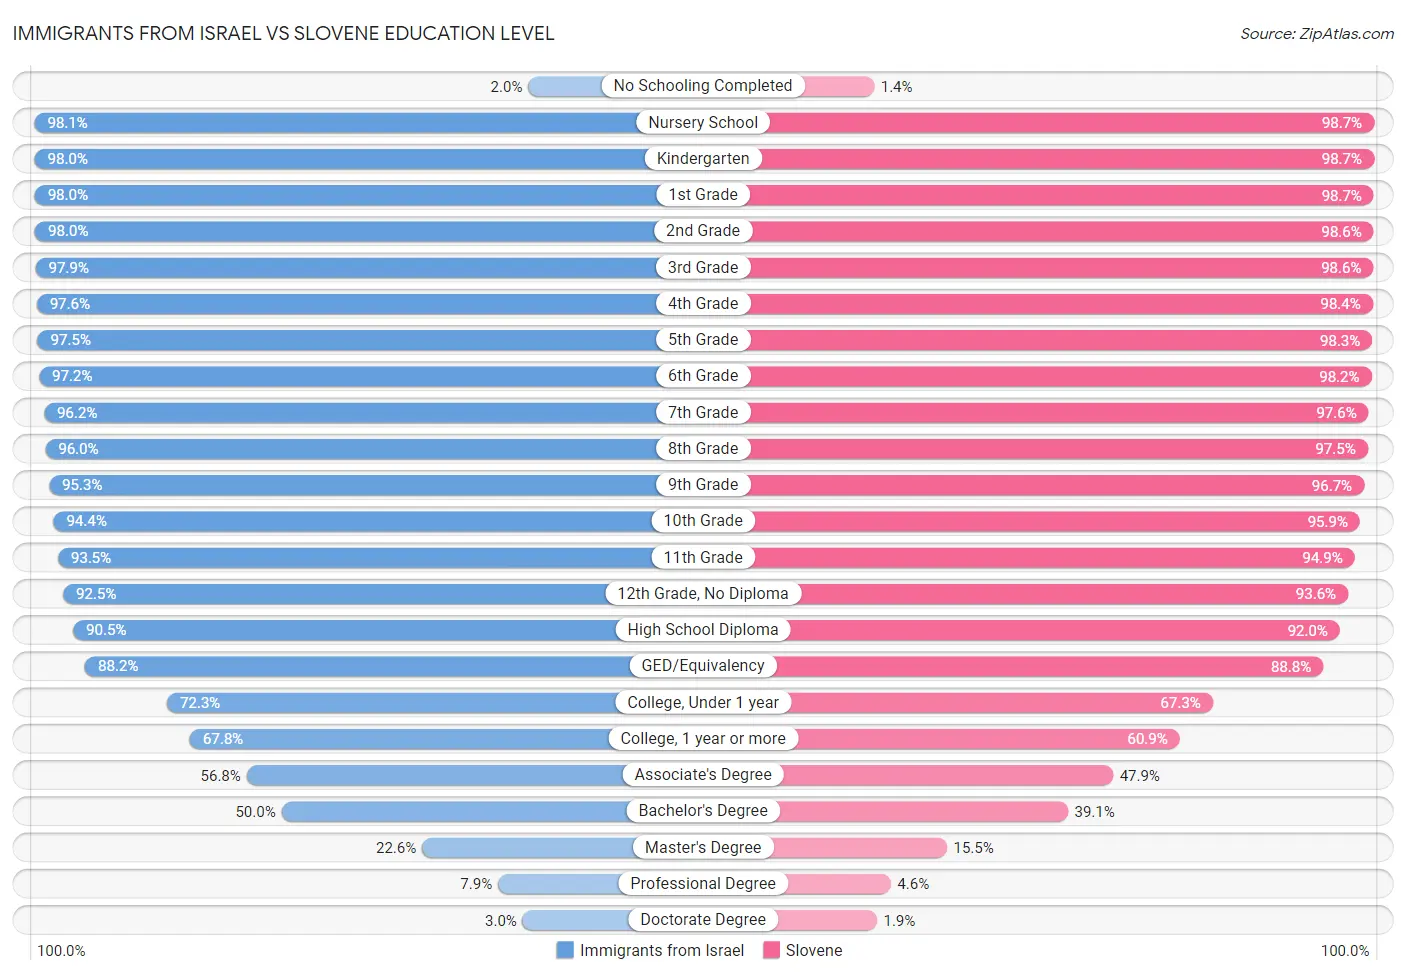 Immigrants from Israel vs Slovene Education Level